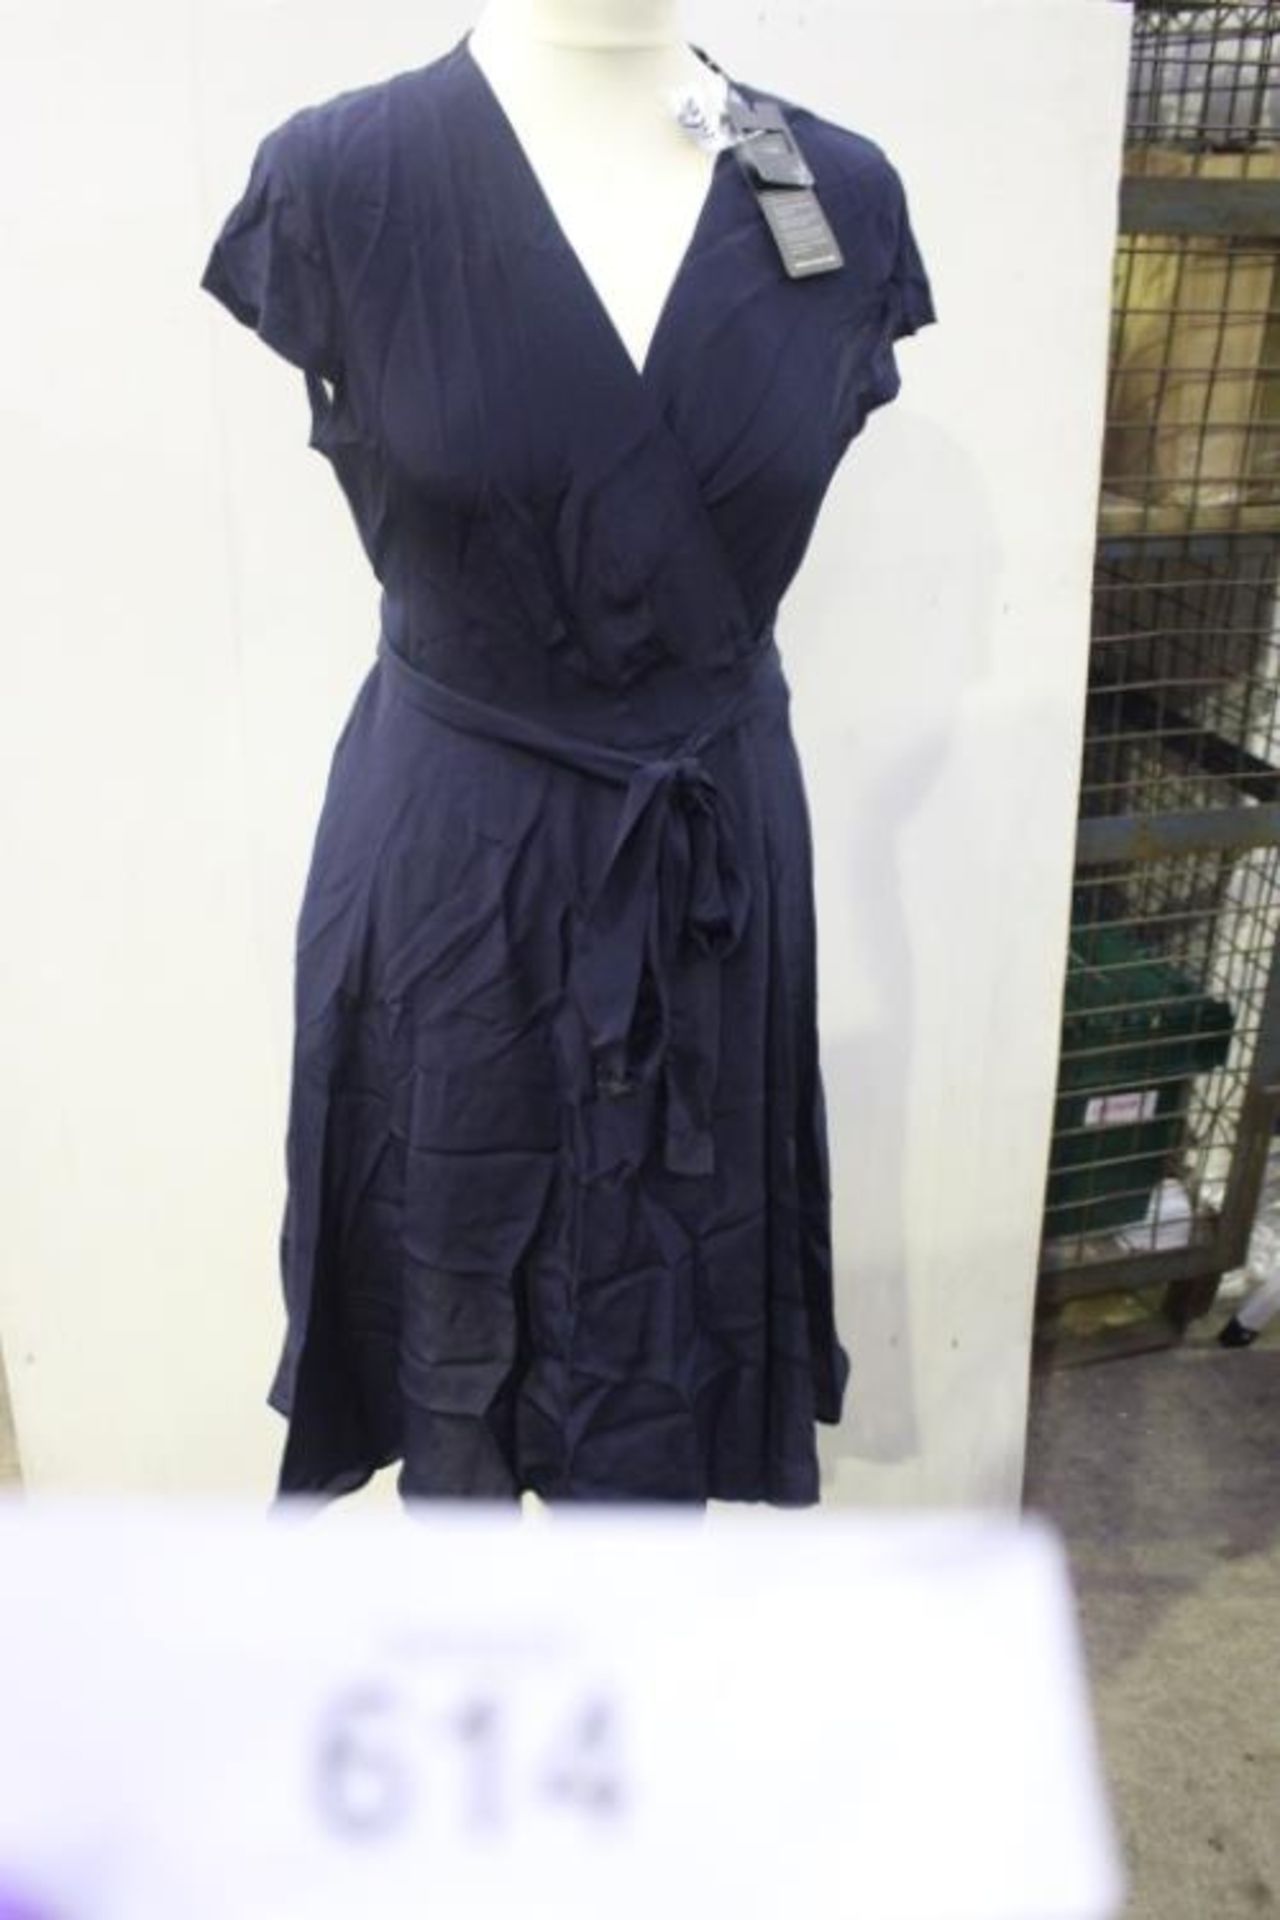 1 x Lily Silk wrap dress, size XL, RRP £240.00 - New in box (C13A)